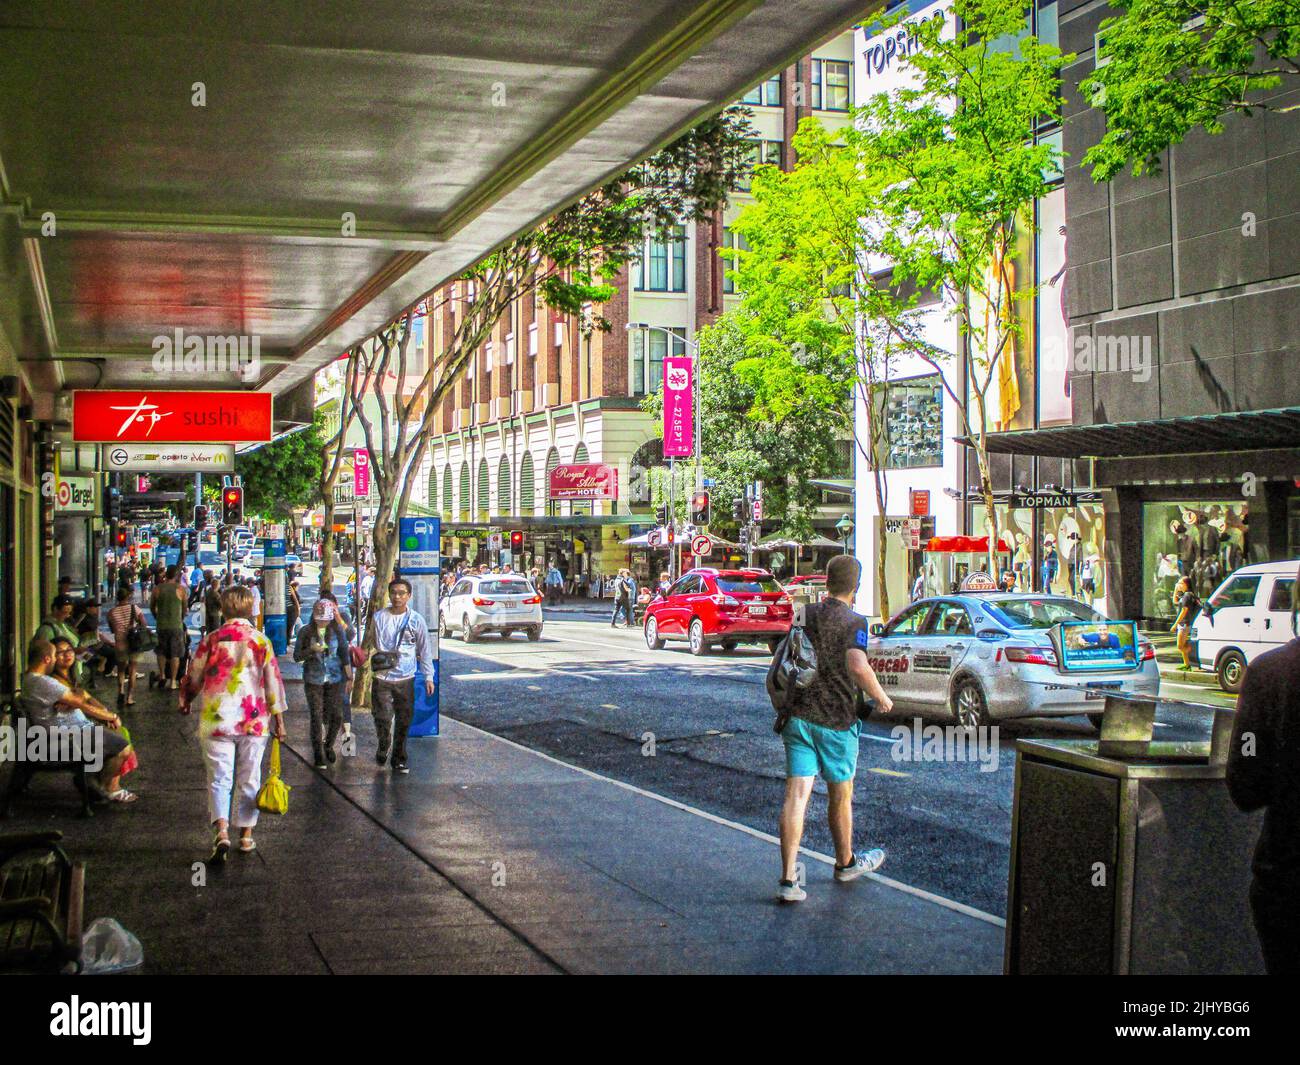 08-14 2014 Brisbane Australia Busy Colorful Downtown CBD streets with man people walking on sidewalks Stock Photo